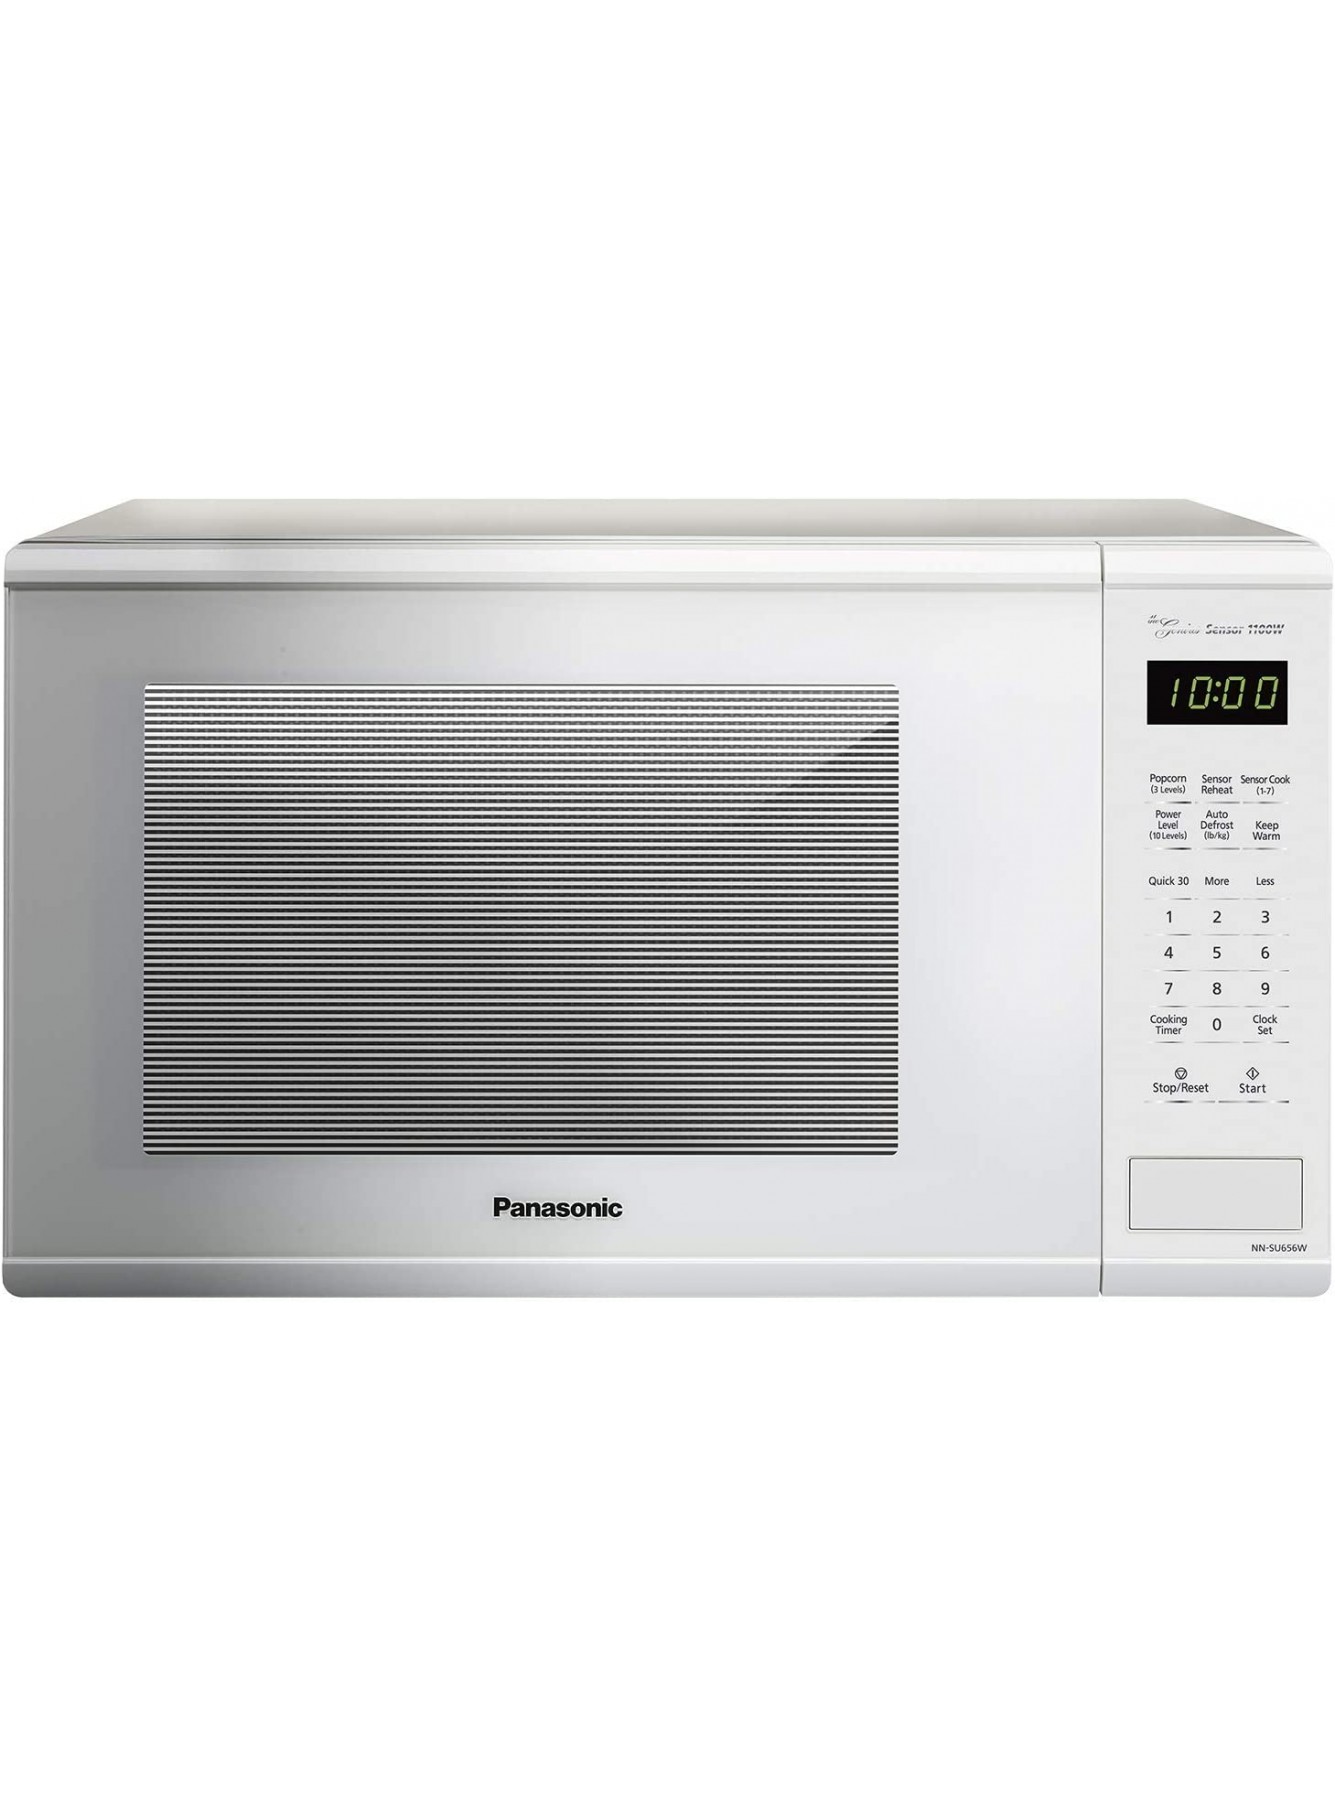 Panasonic NN-SU656W Countertop Microwave Oven with Genius Cooking Sensor and Popcorn Button 1.3 cu. ft. 1100W White Renewed B07R8TMNPF